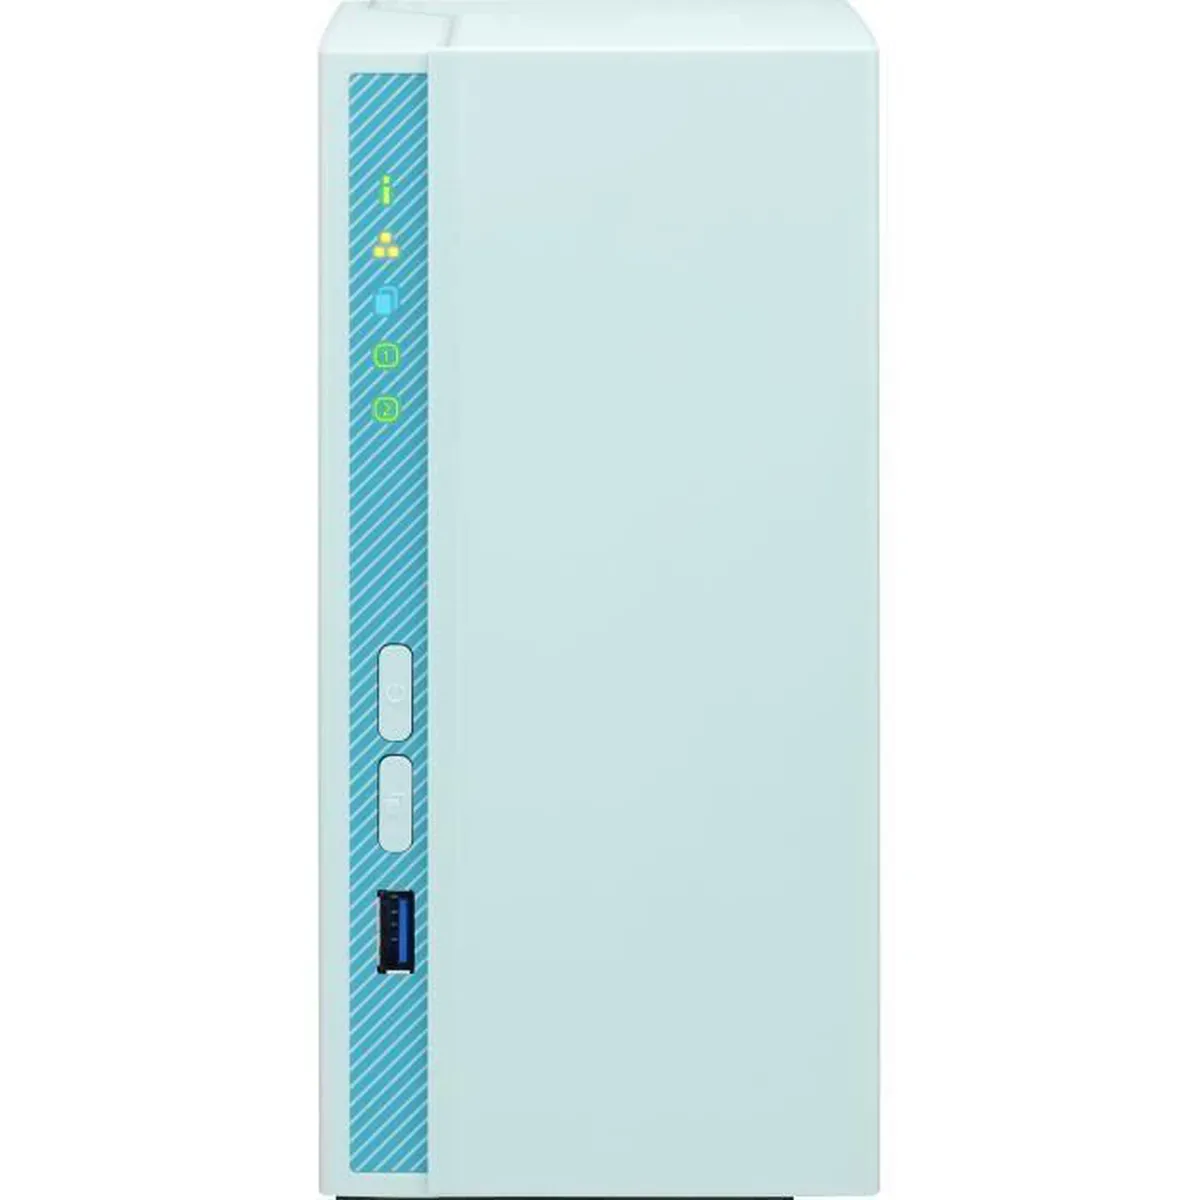 QNAP TS-230 Serveur NAS 2 baies (sans disque dur) – E-SHOP